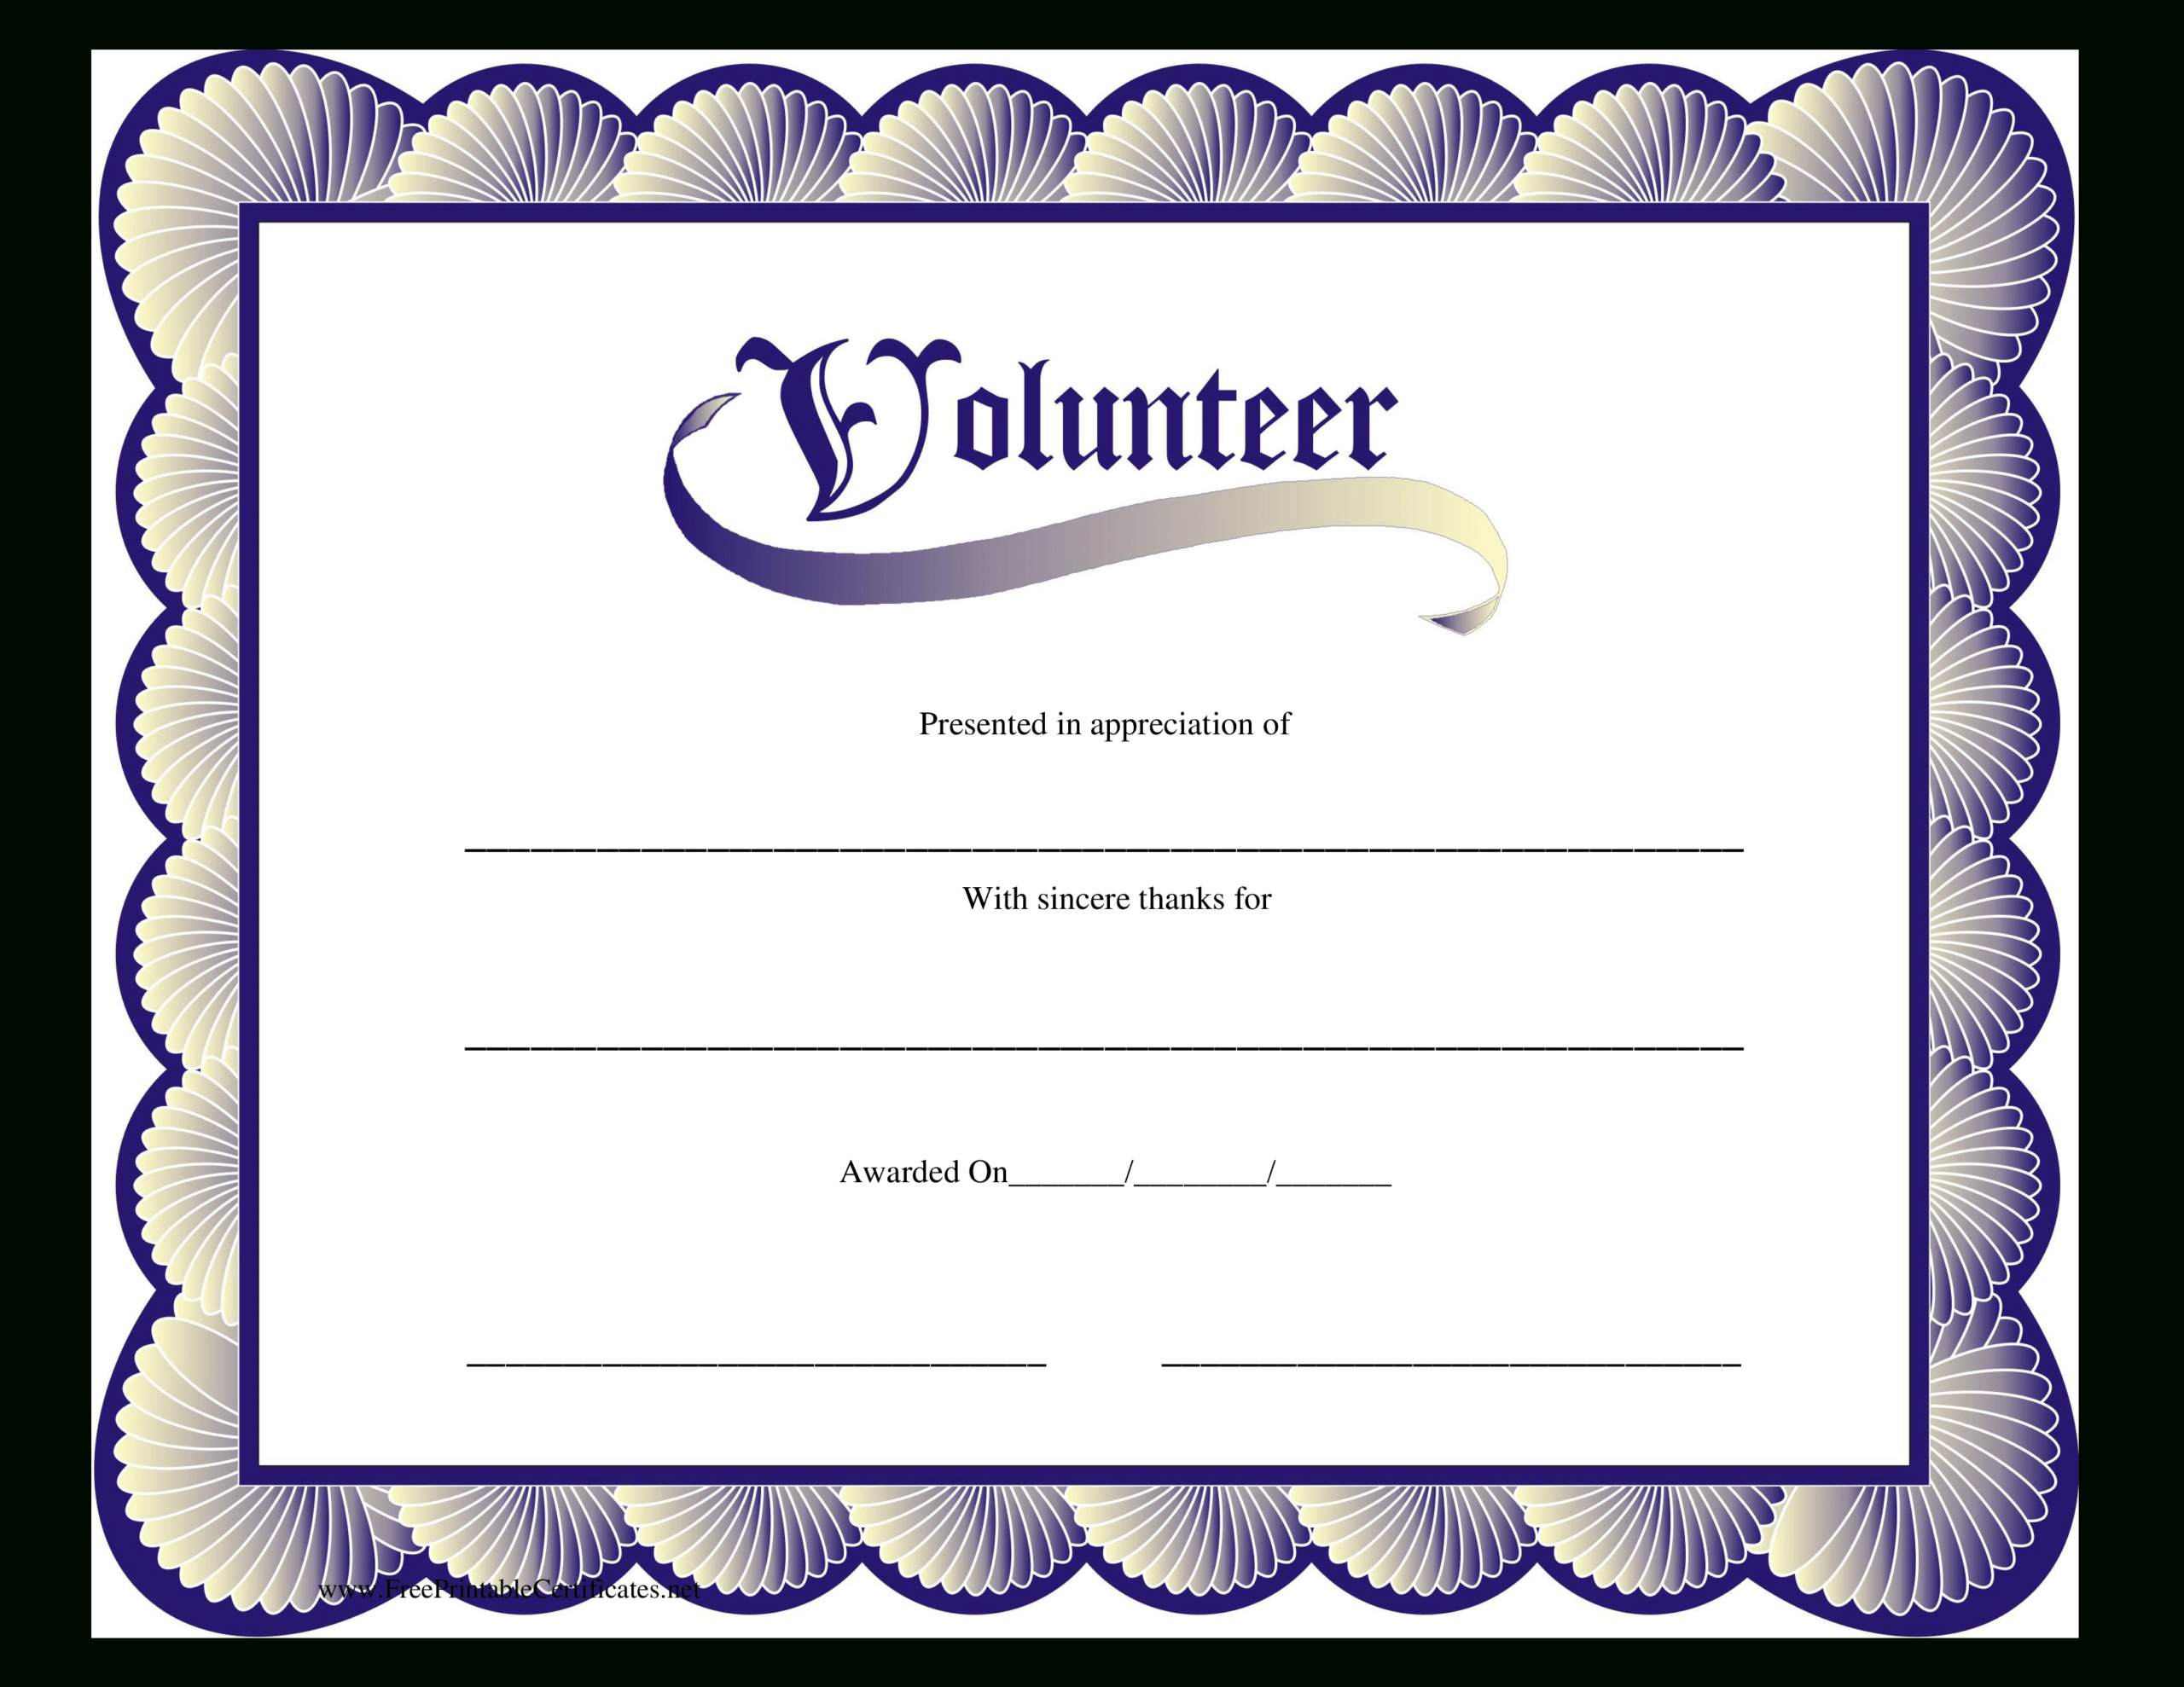 Volunteer Certificate | Templates At Allbusinesstemplates Intended For Volunteer Certificate Template